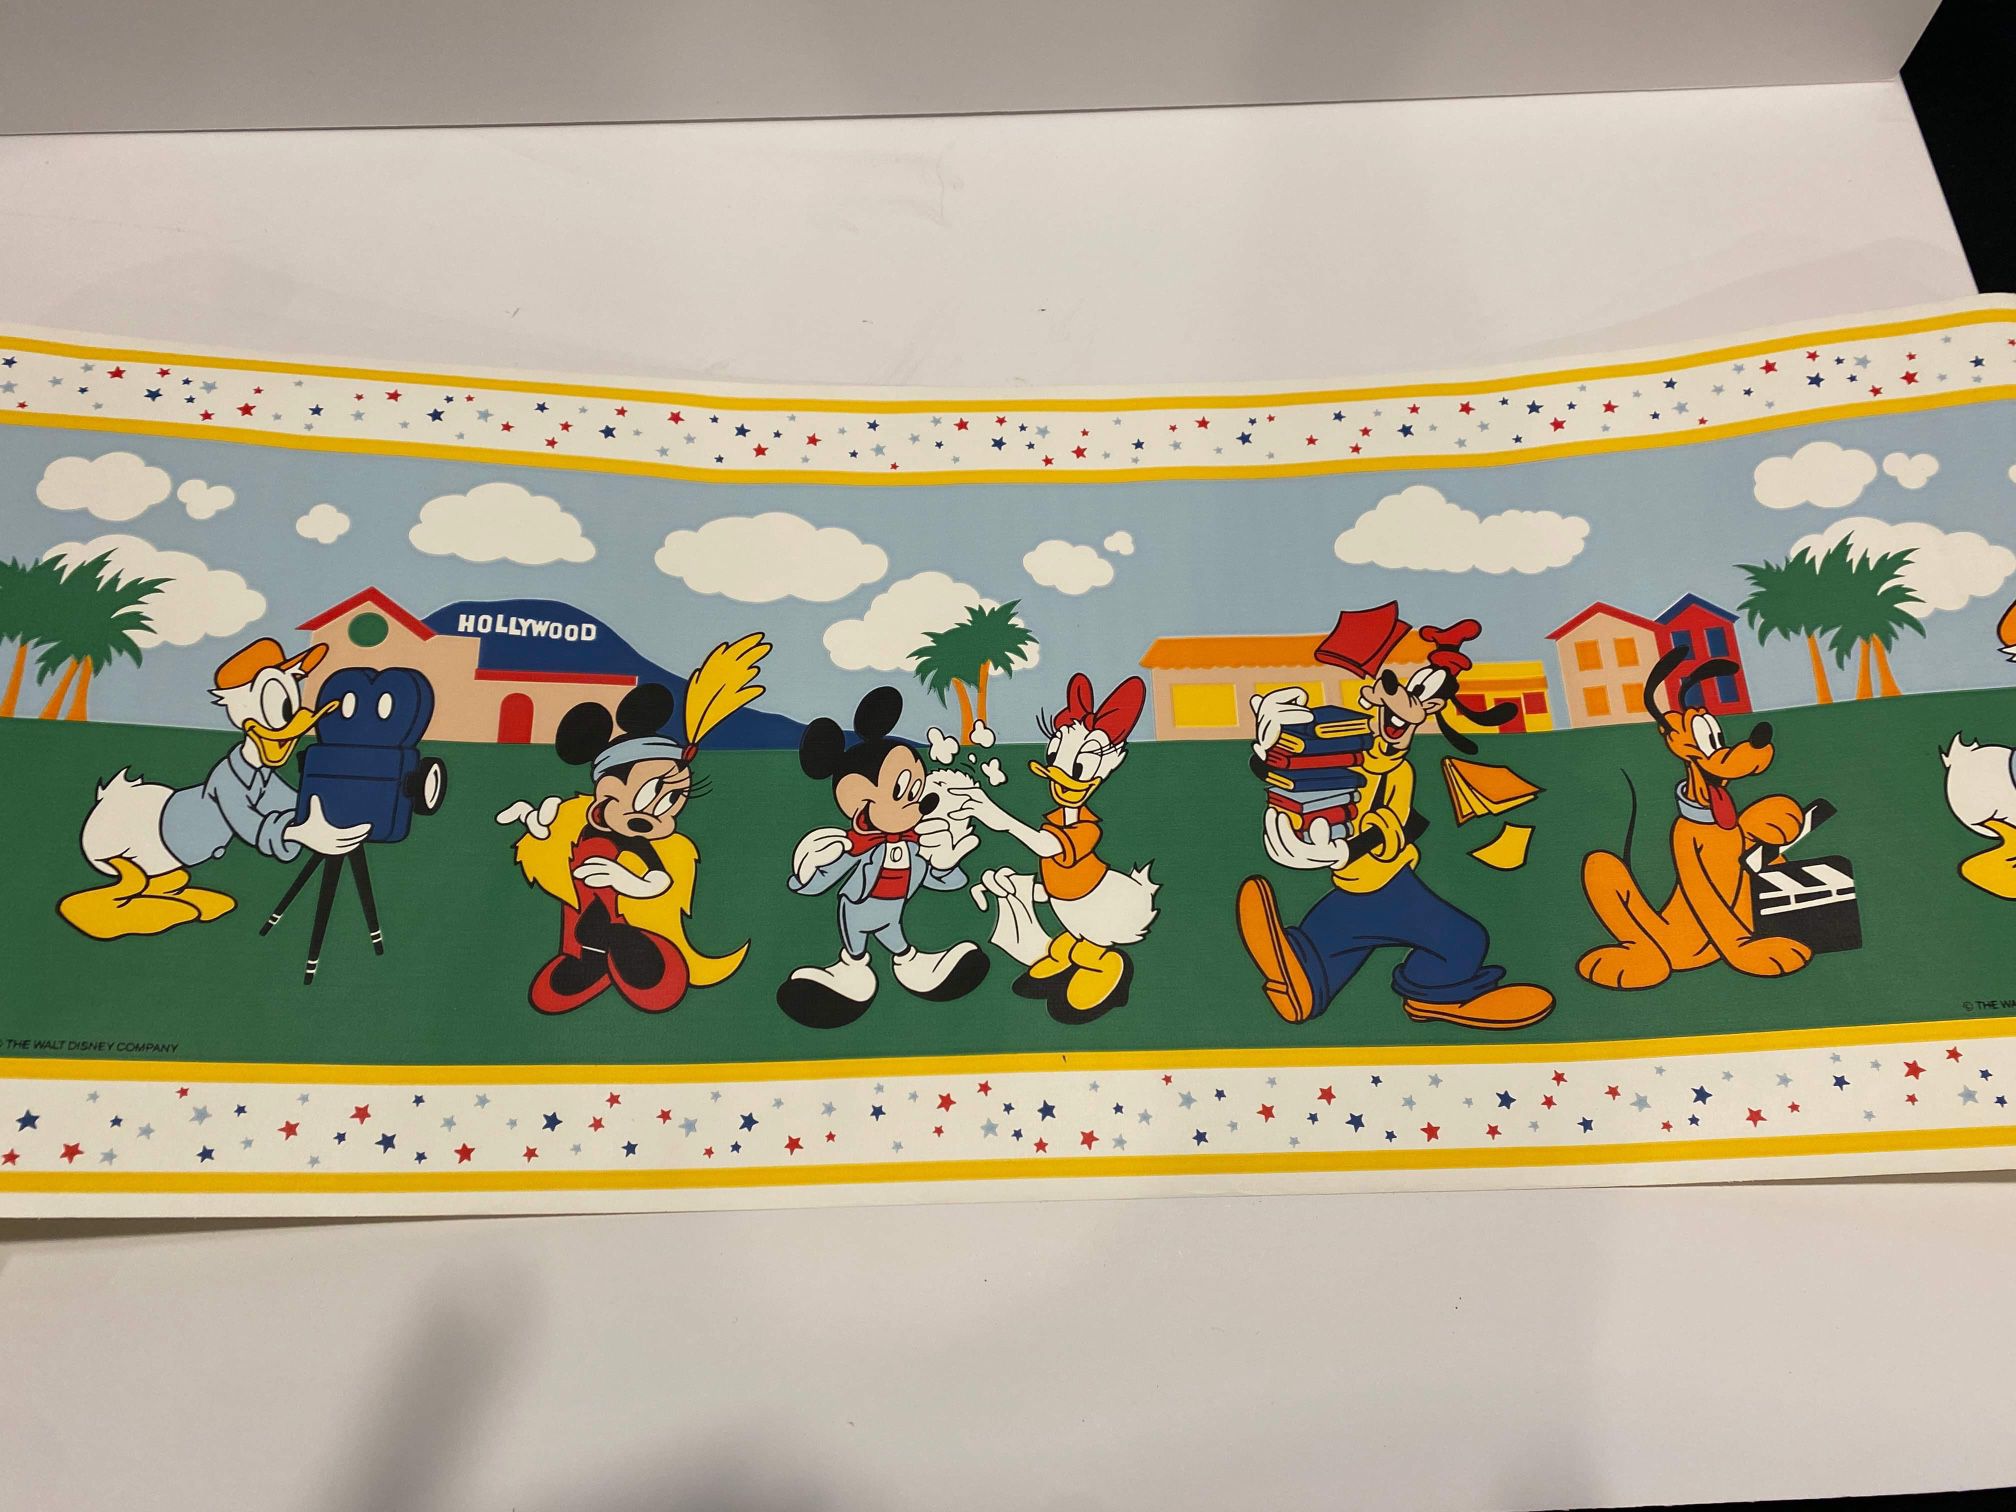 (9) NEW Vintage Walt Disney Wallpaper Border Hollywood Movie Mickey Minnie Mouse Goofy Donald Pluto